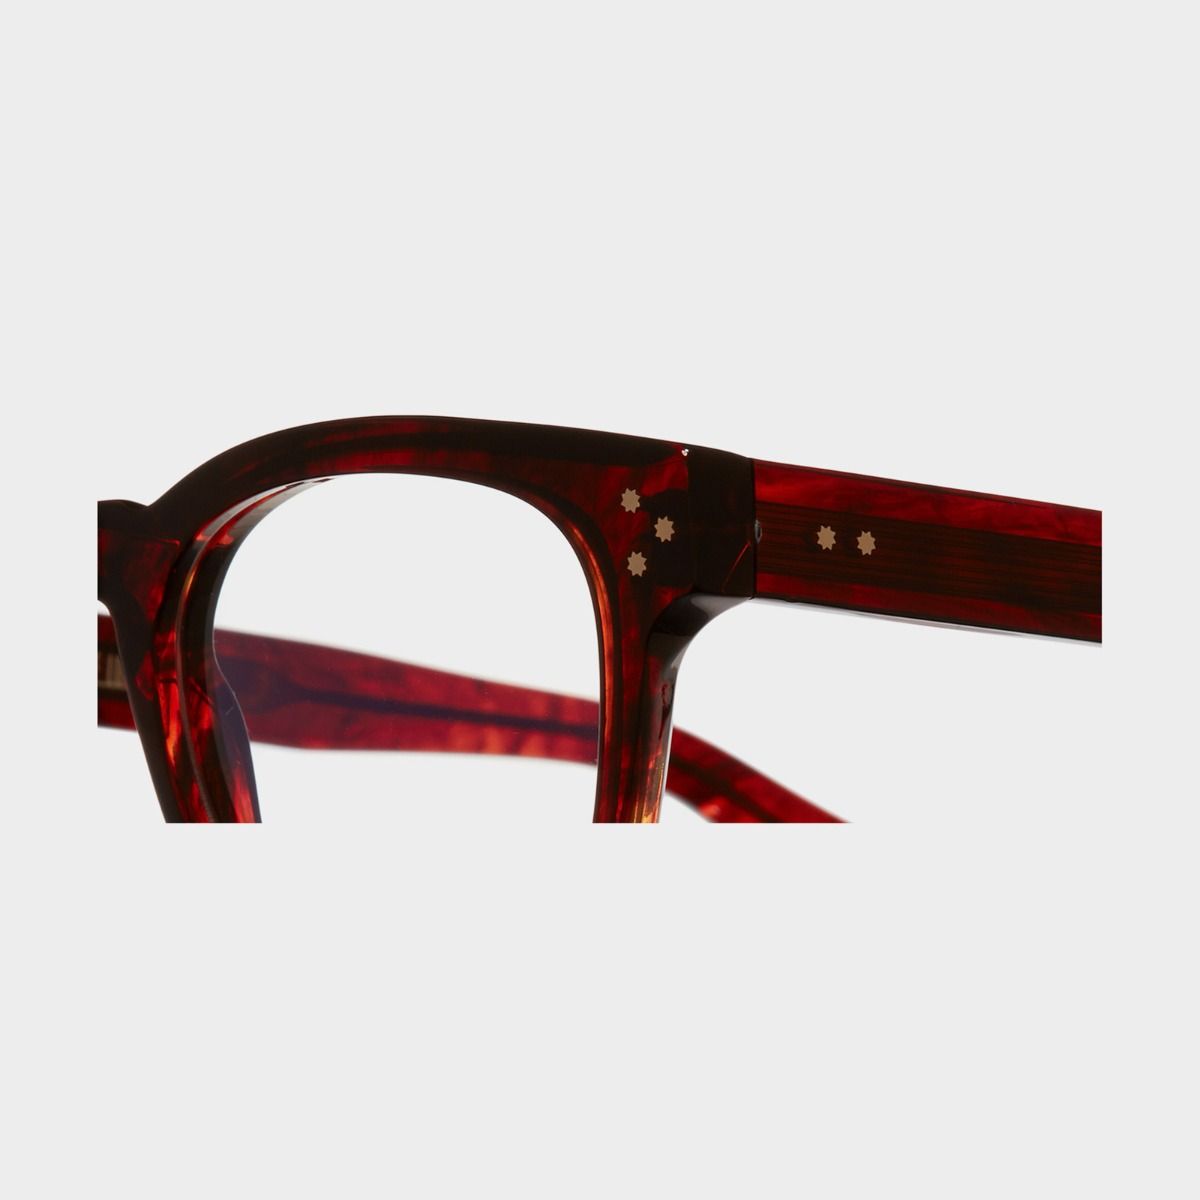 Cutler and Gross, 1389 Optical Square Glasses - Nolita Havana